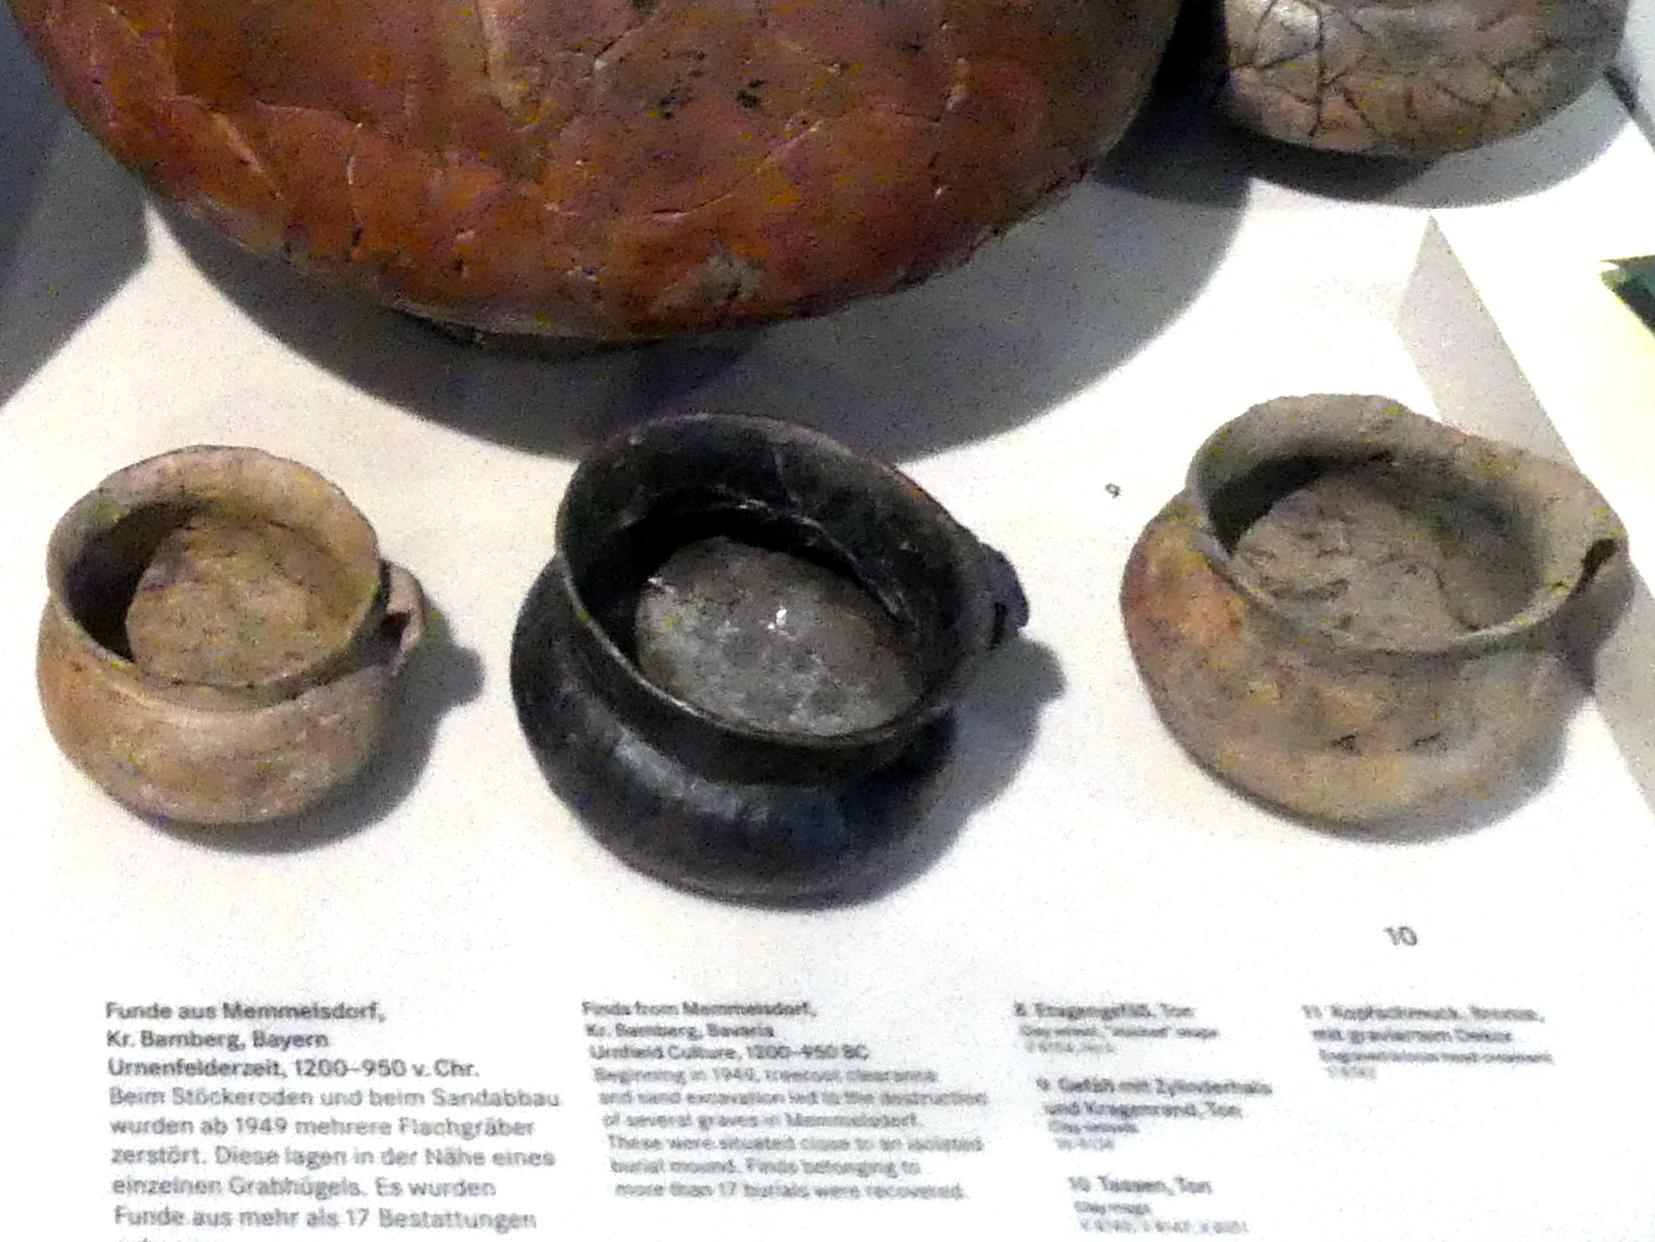 Tassen, Urnenfelderzeit, 1400 - 700 v. Chr., 1200 - 950 v. Chr., Bild 1/2